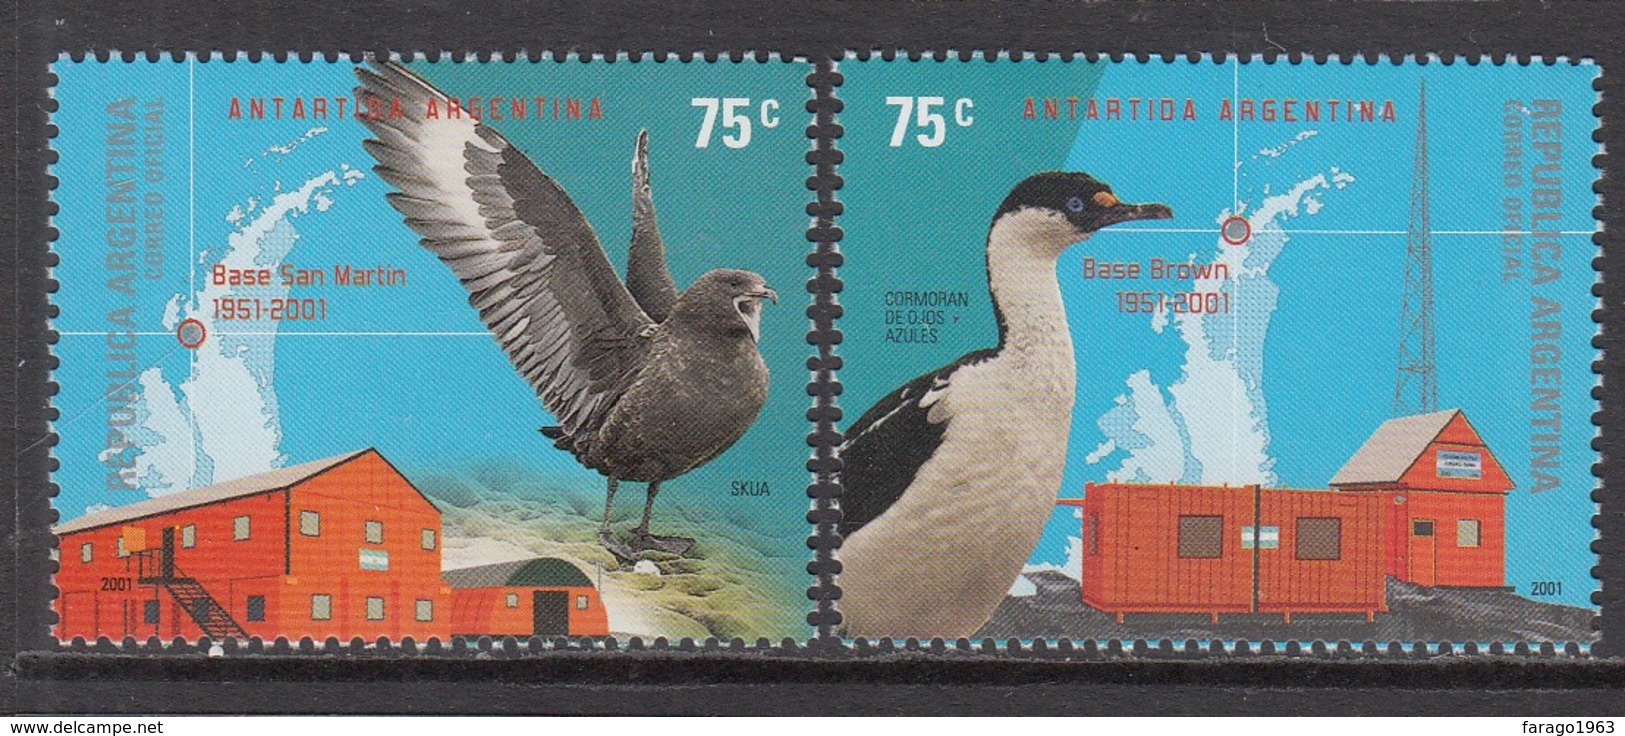 2001 Argentina Antarctic Bases Birds Complete Set Of 2  MNH - Nuevos